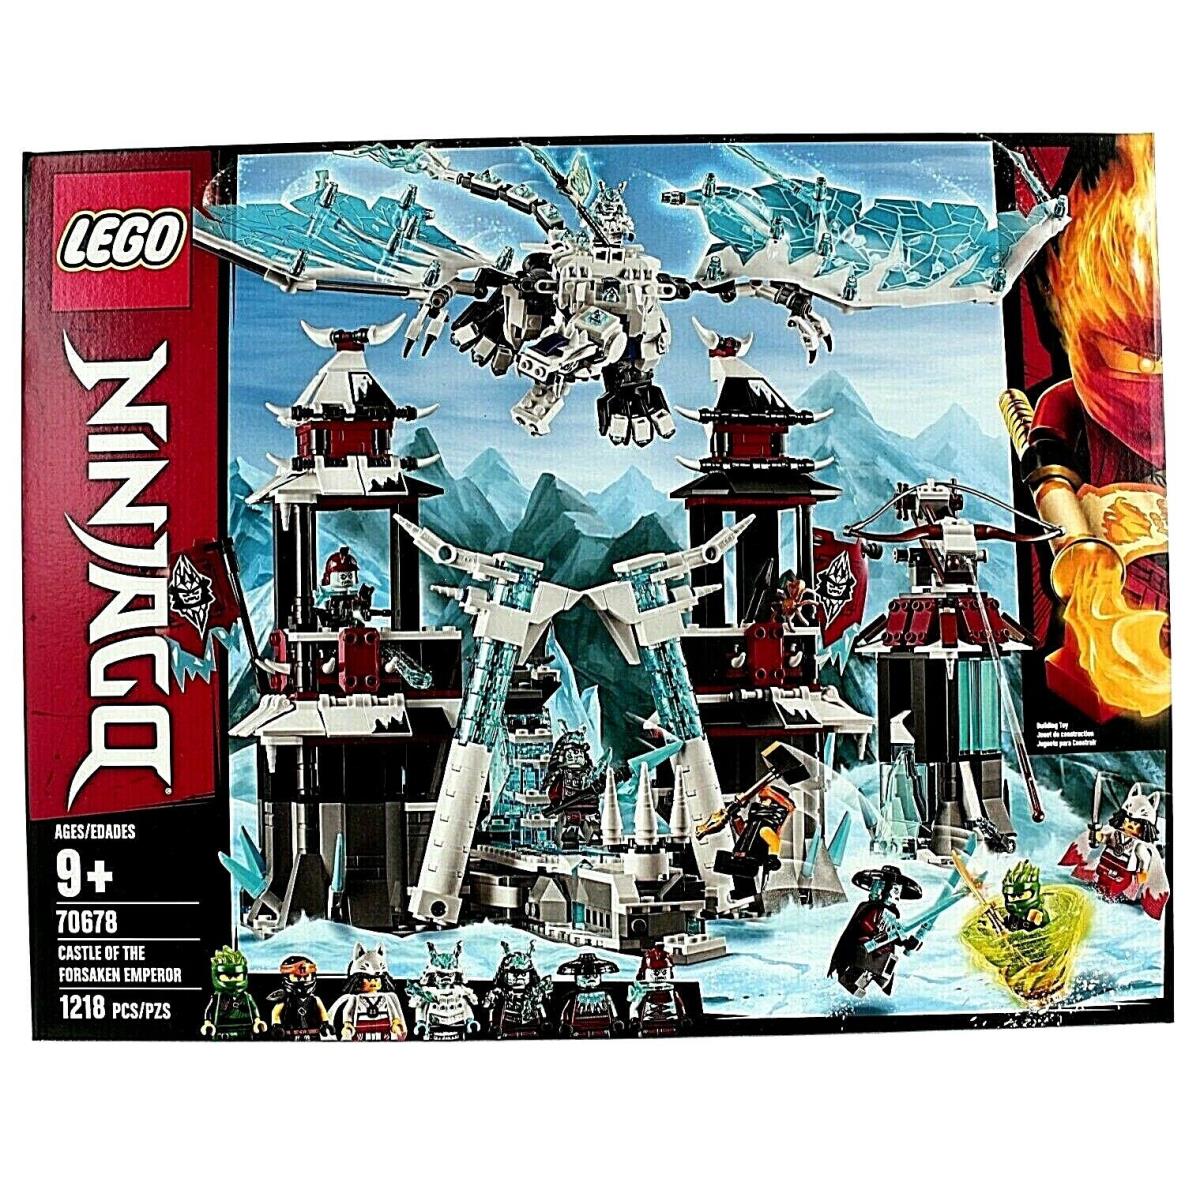 Lego Ninjago 70678 Castle of The Forsaken Emperor 1218pc Building Toy Set 9+